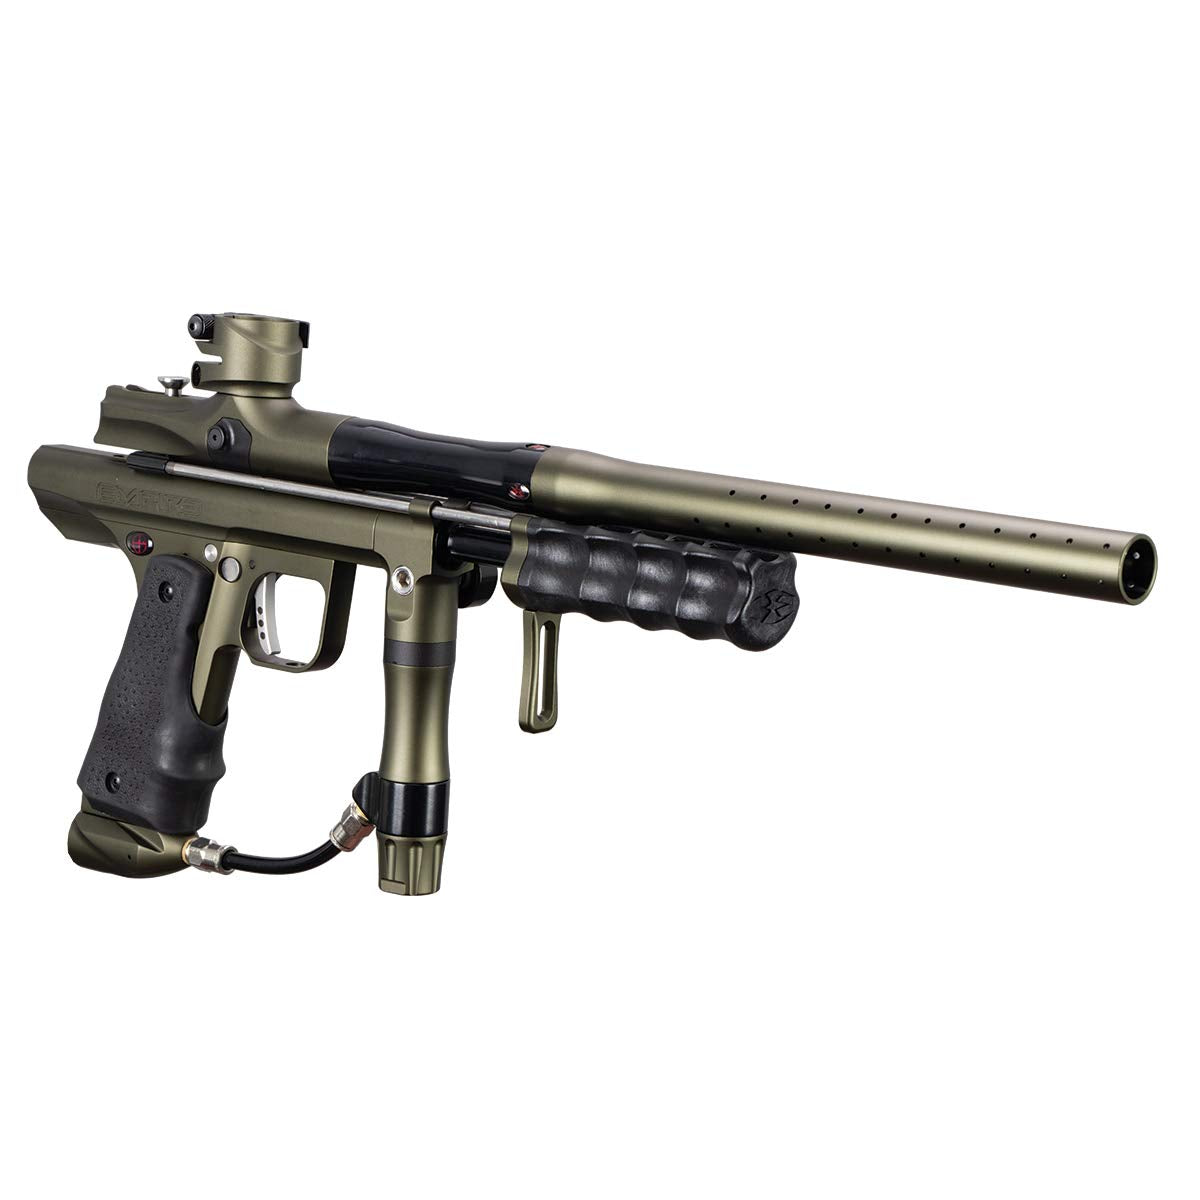 Empire Sniper Pump - Dust Olive / Polished Black - Empire